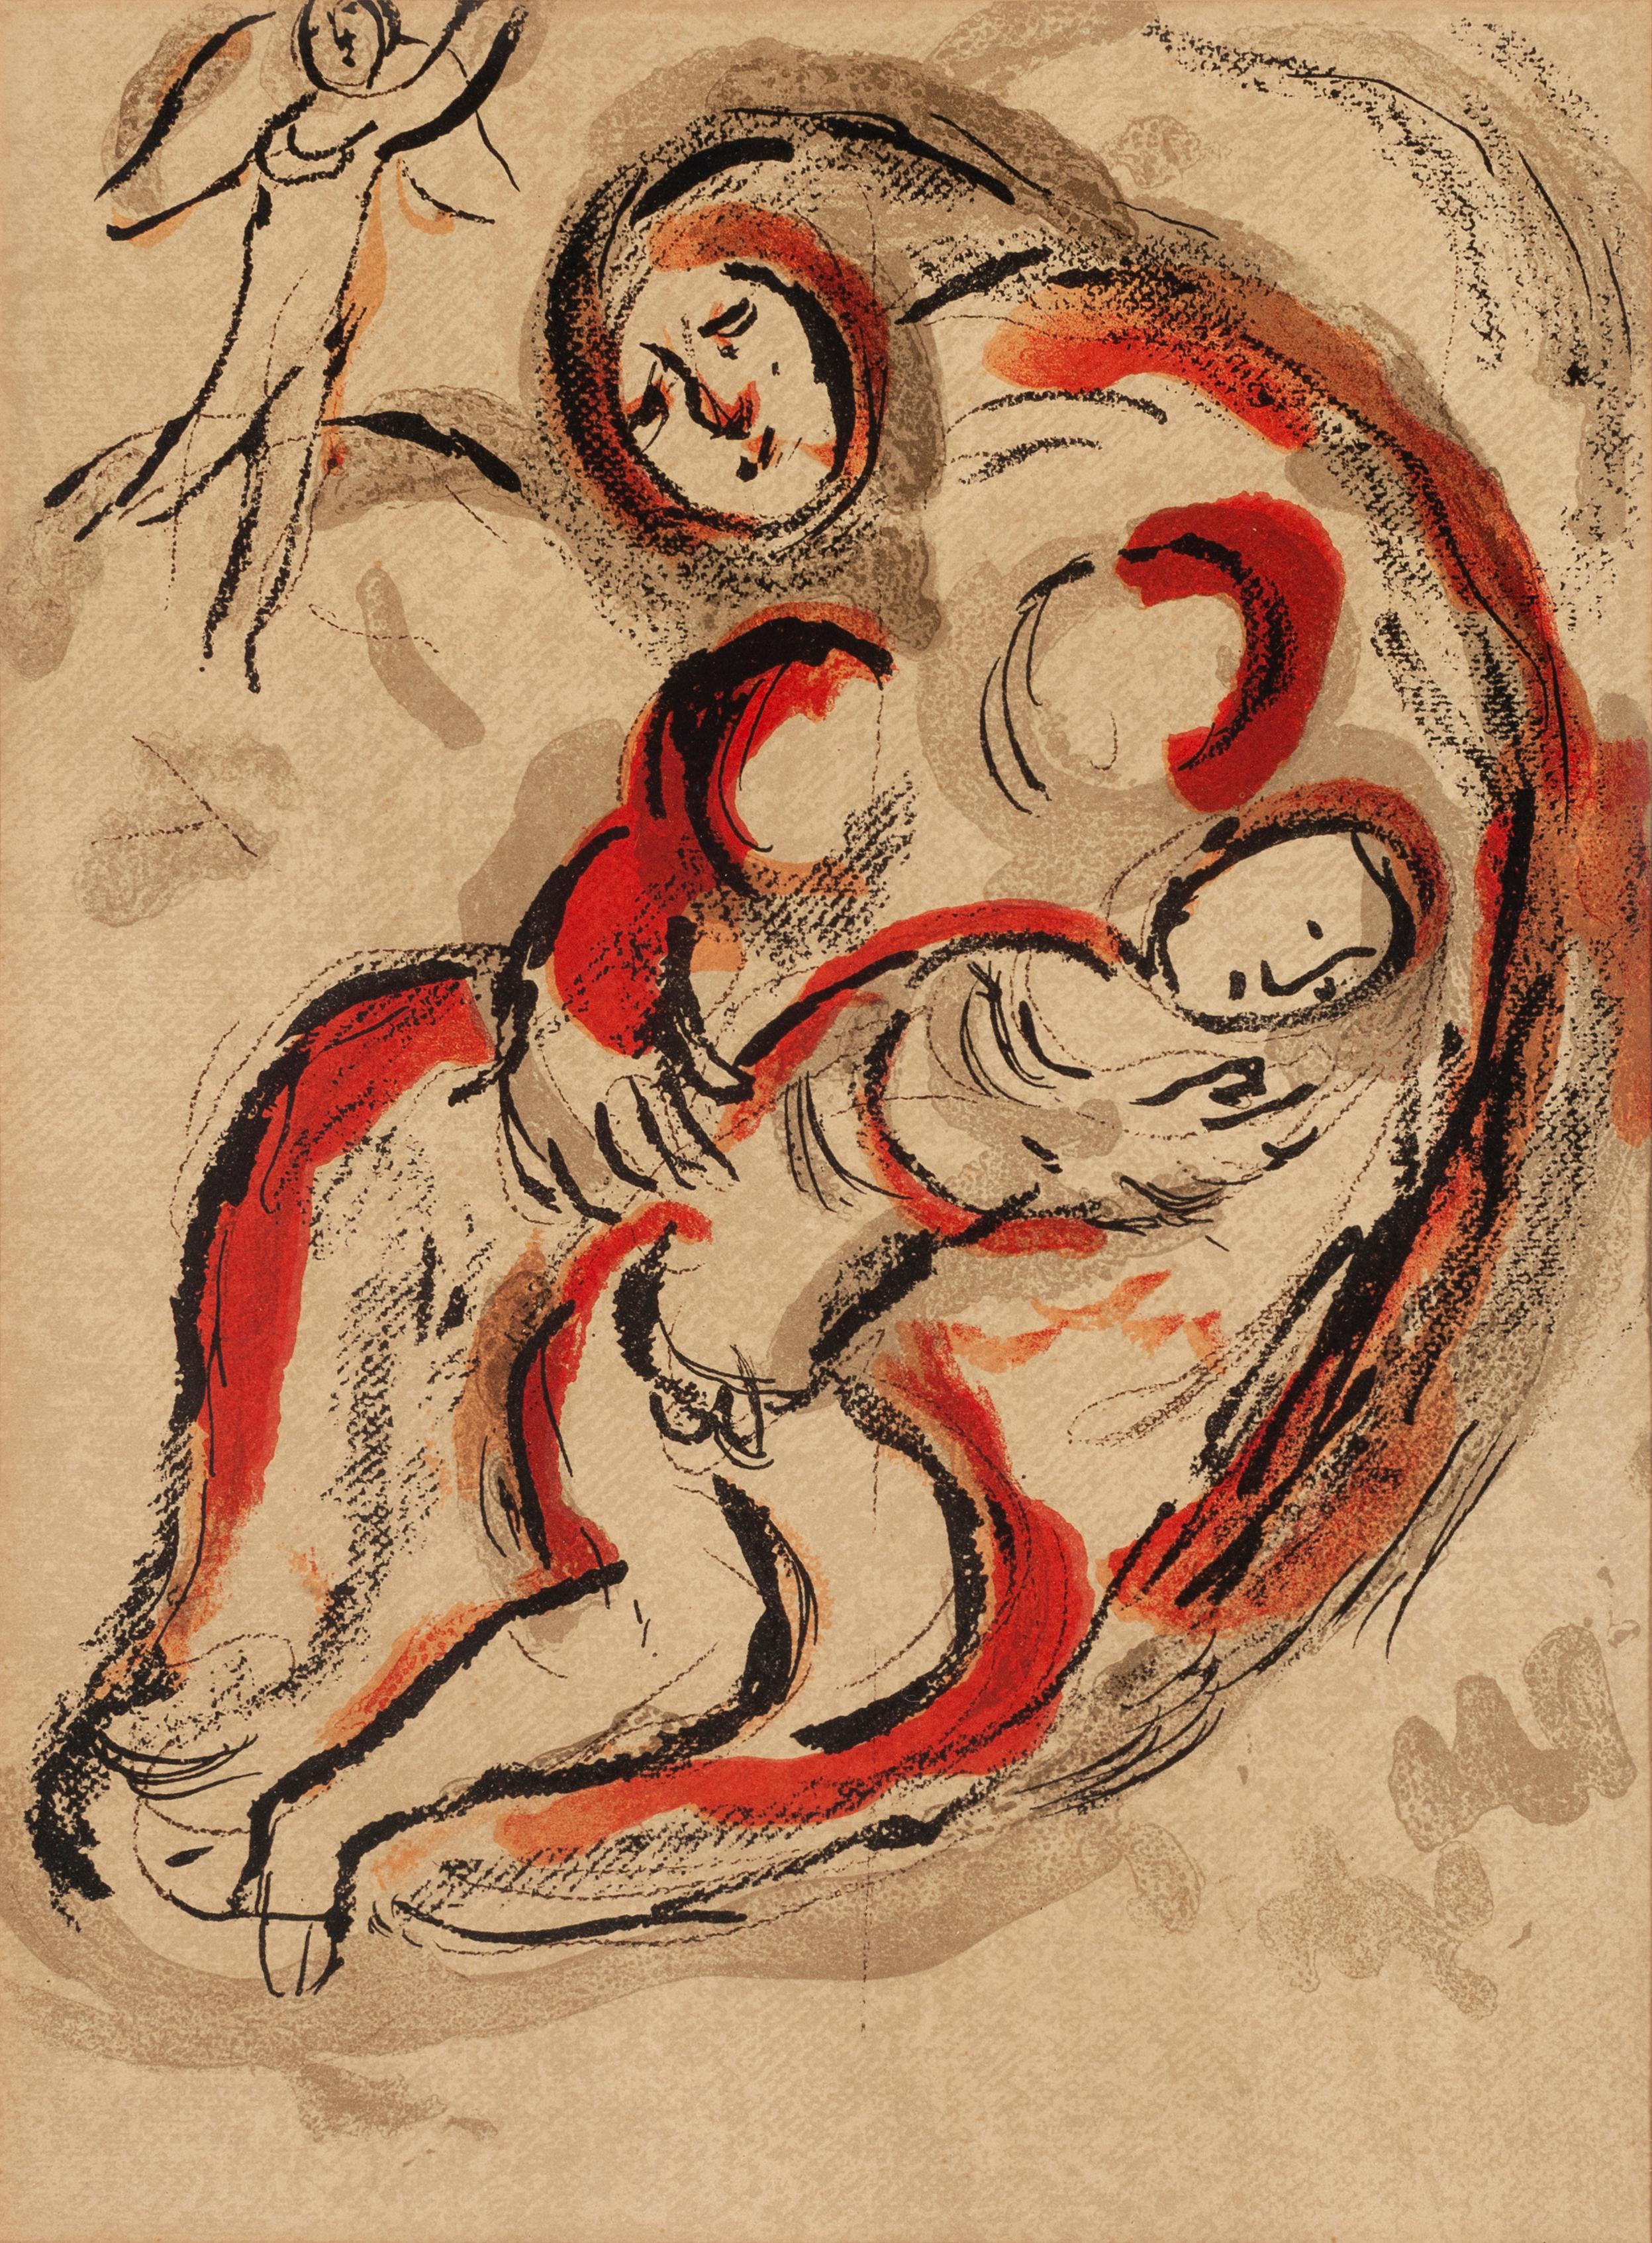 Hagar in the Desert - Print by Marc Chagall